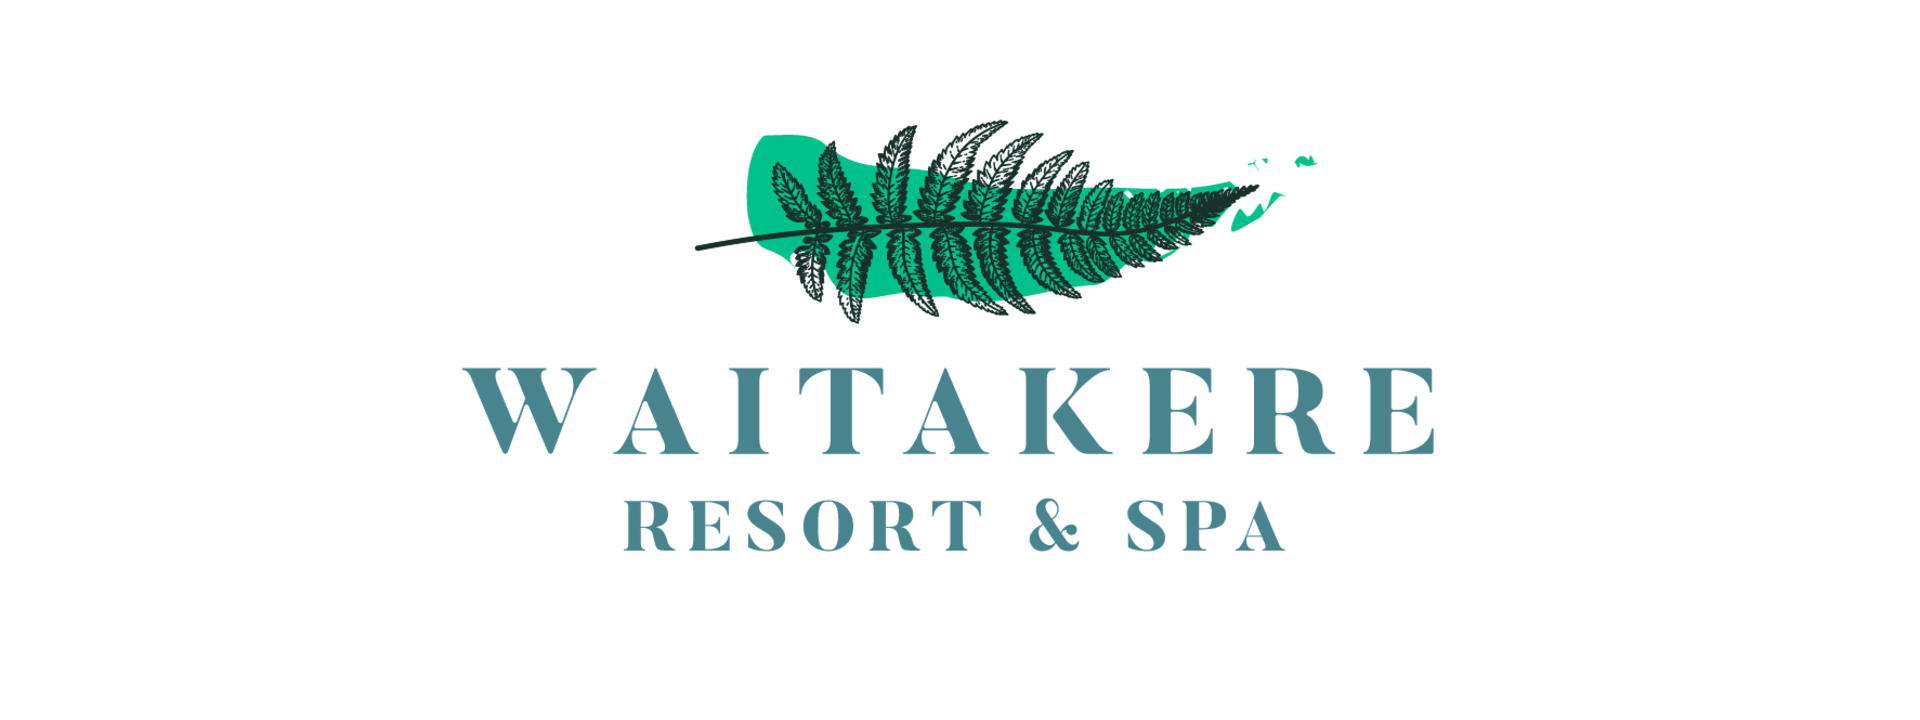 Waitakeri Resort_REVERSED.jpg